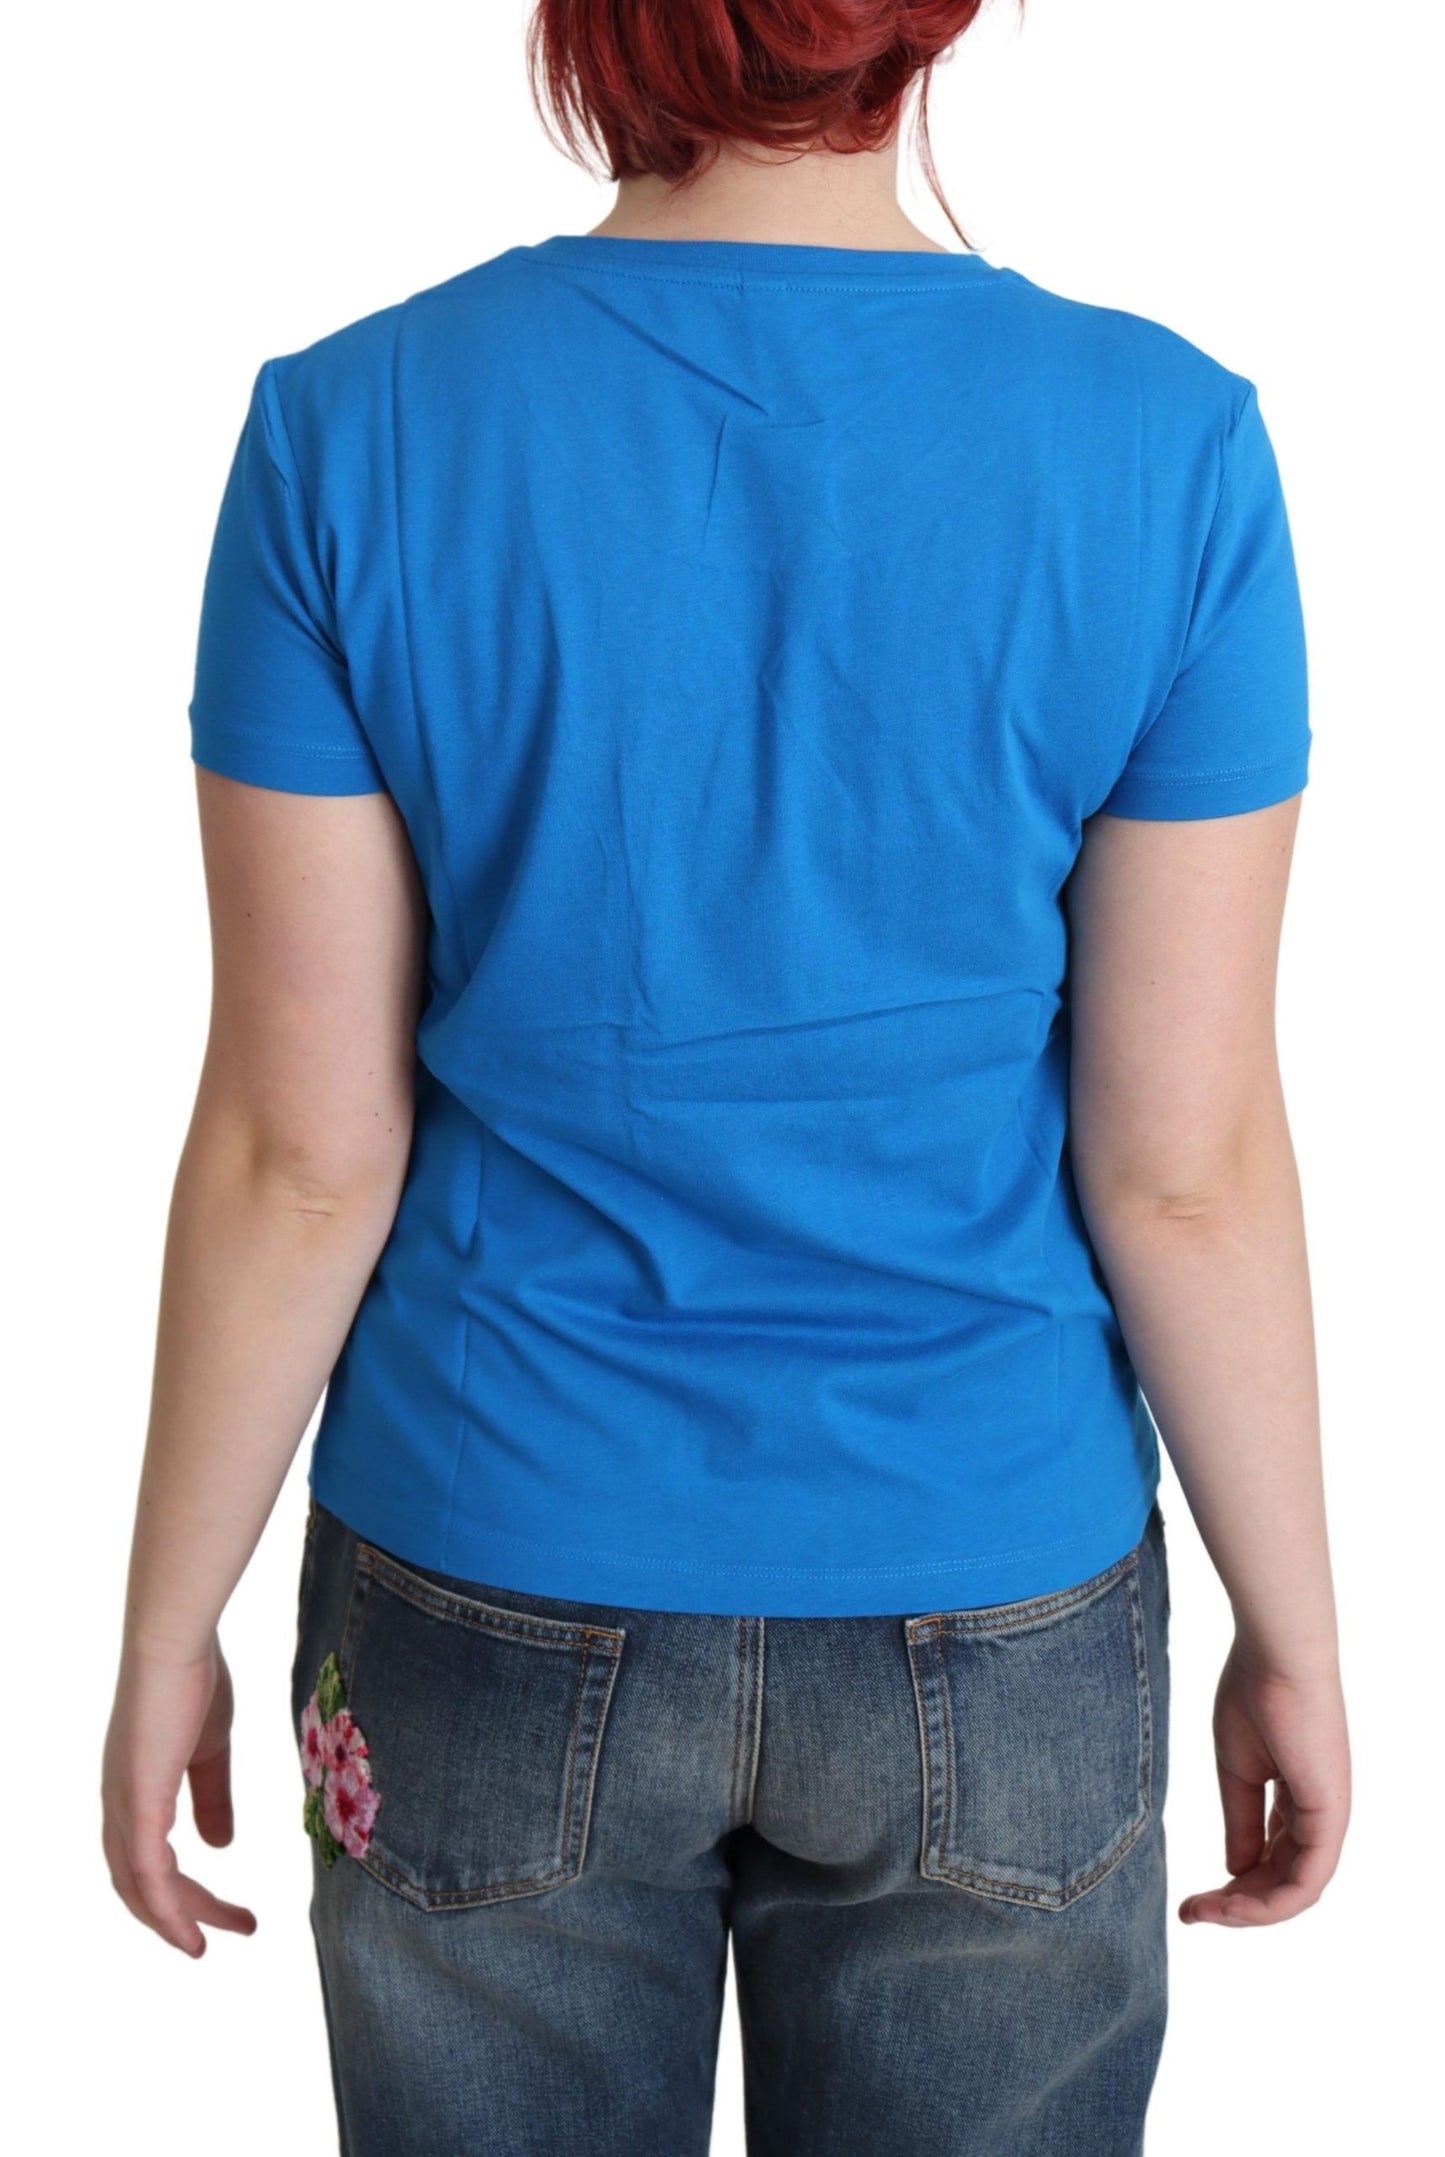 Moschino blau gedruckte Baumwollkurzärmel Tops T-Shirt